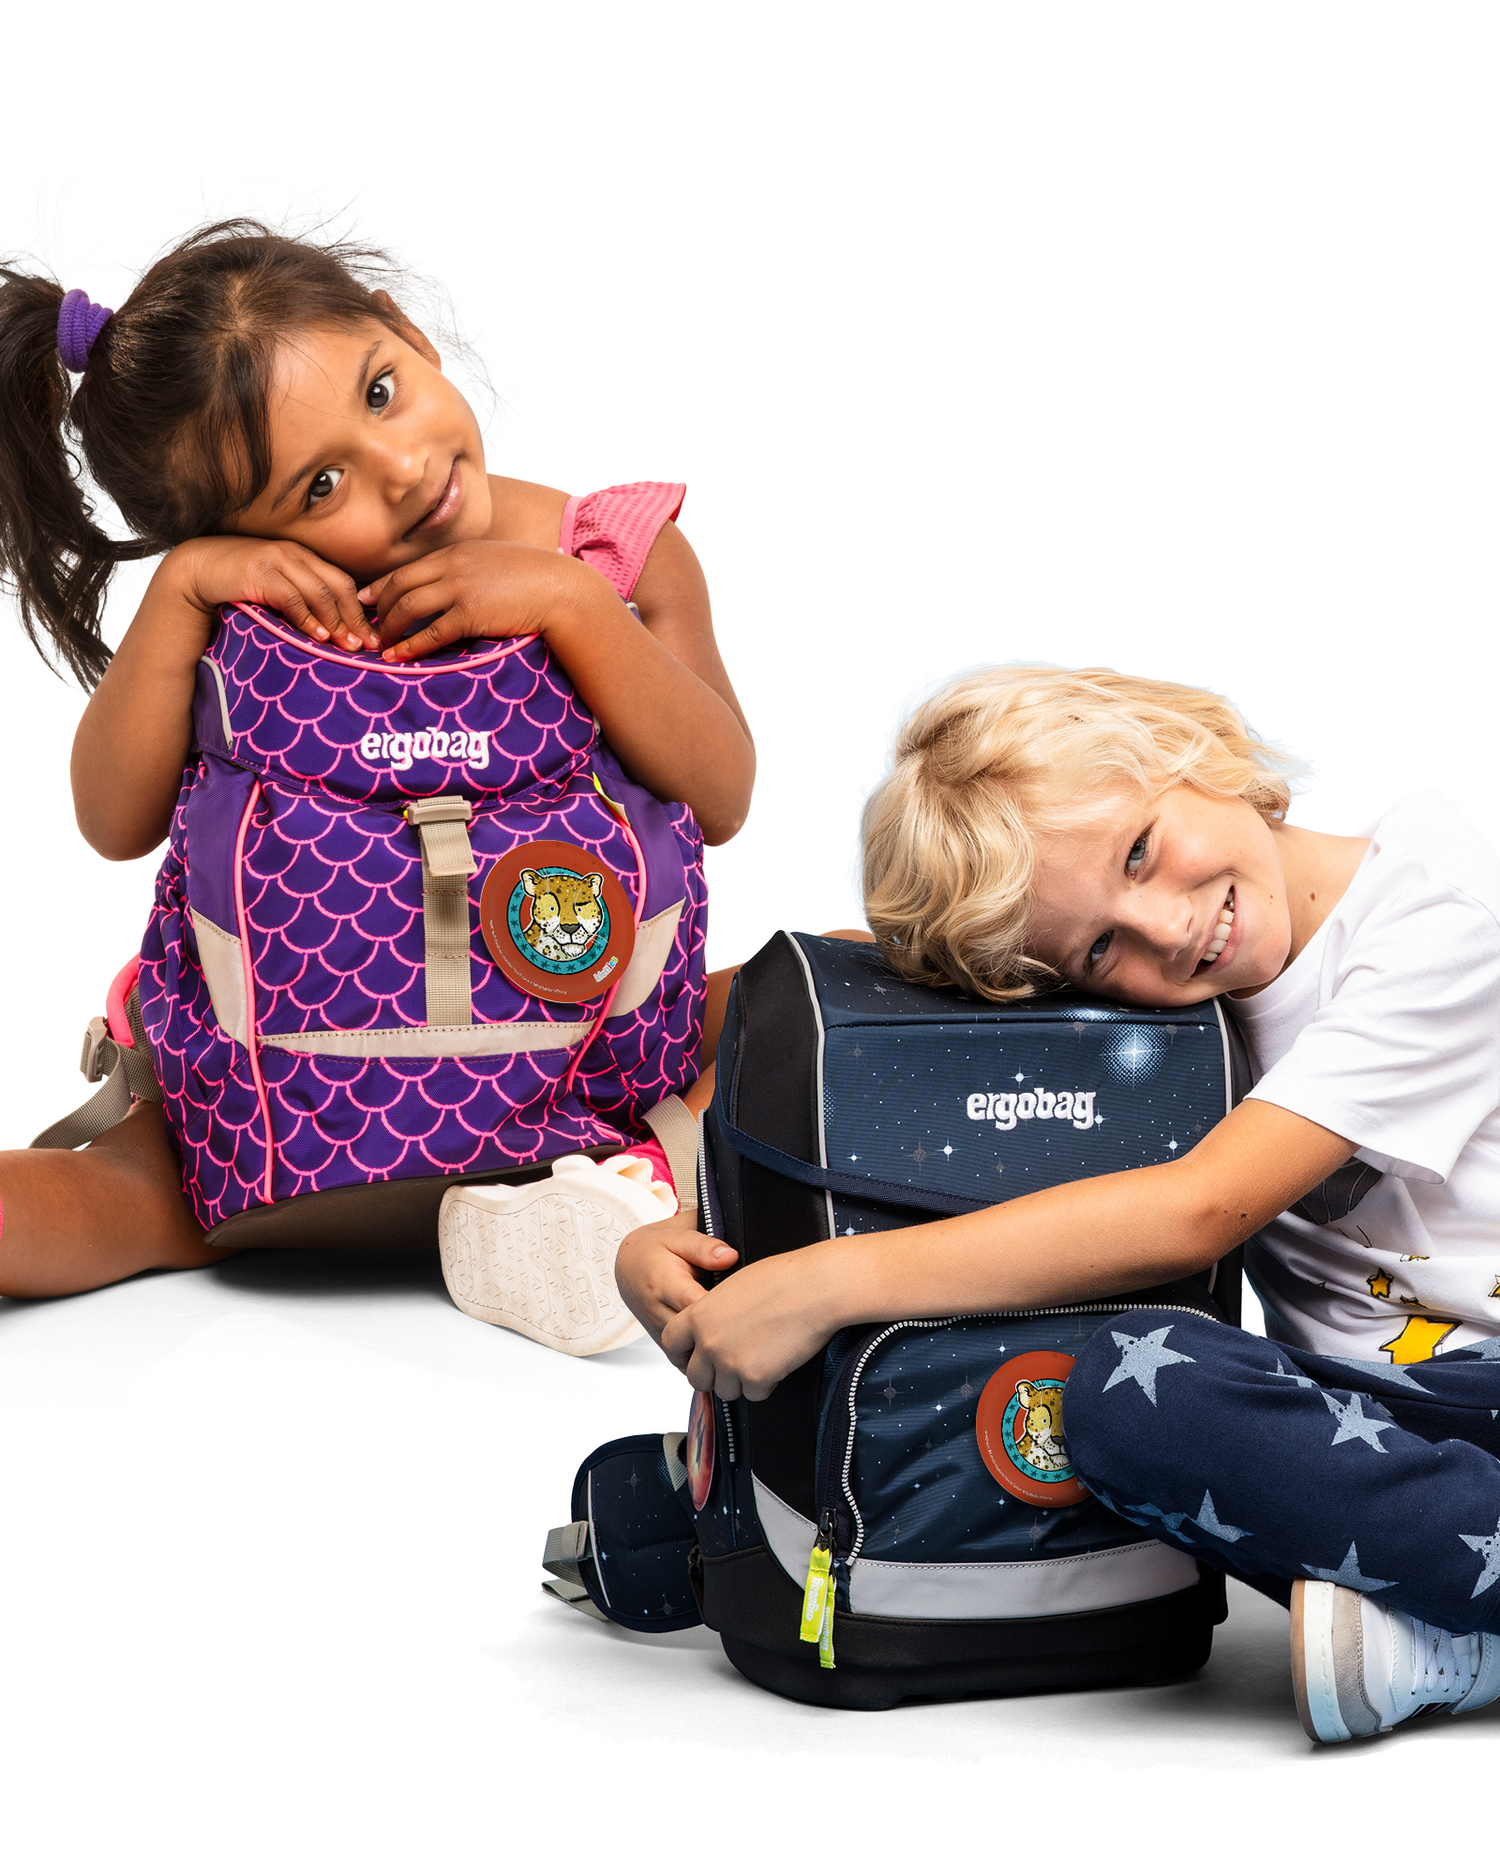 SdmT Leander Klettie: Attached to childrens ergobag backpack